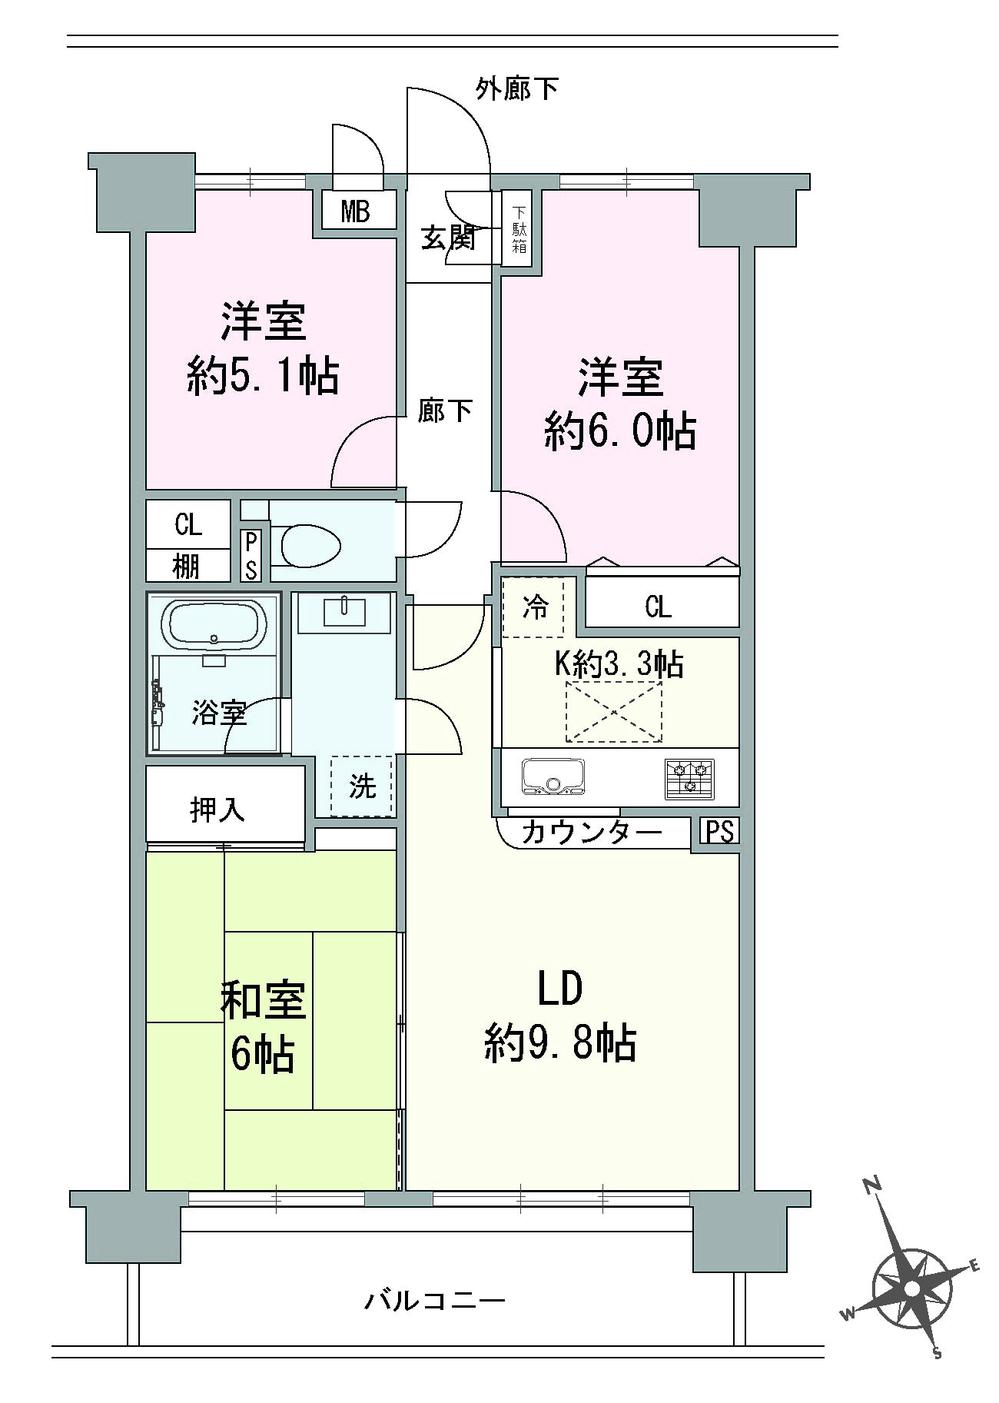 Floor plan. 3LDK, Price 13.3 million yen, Footprint 65.1 sq m , Balcony area 9.3 sq m